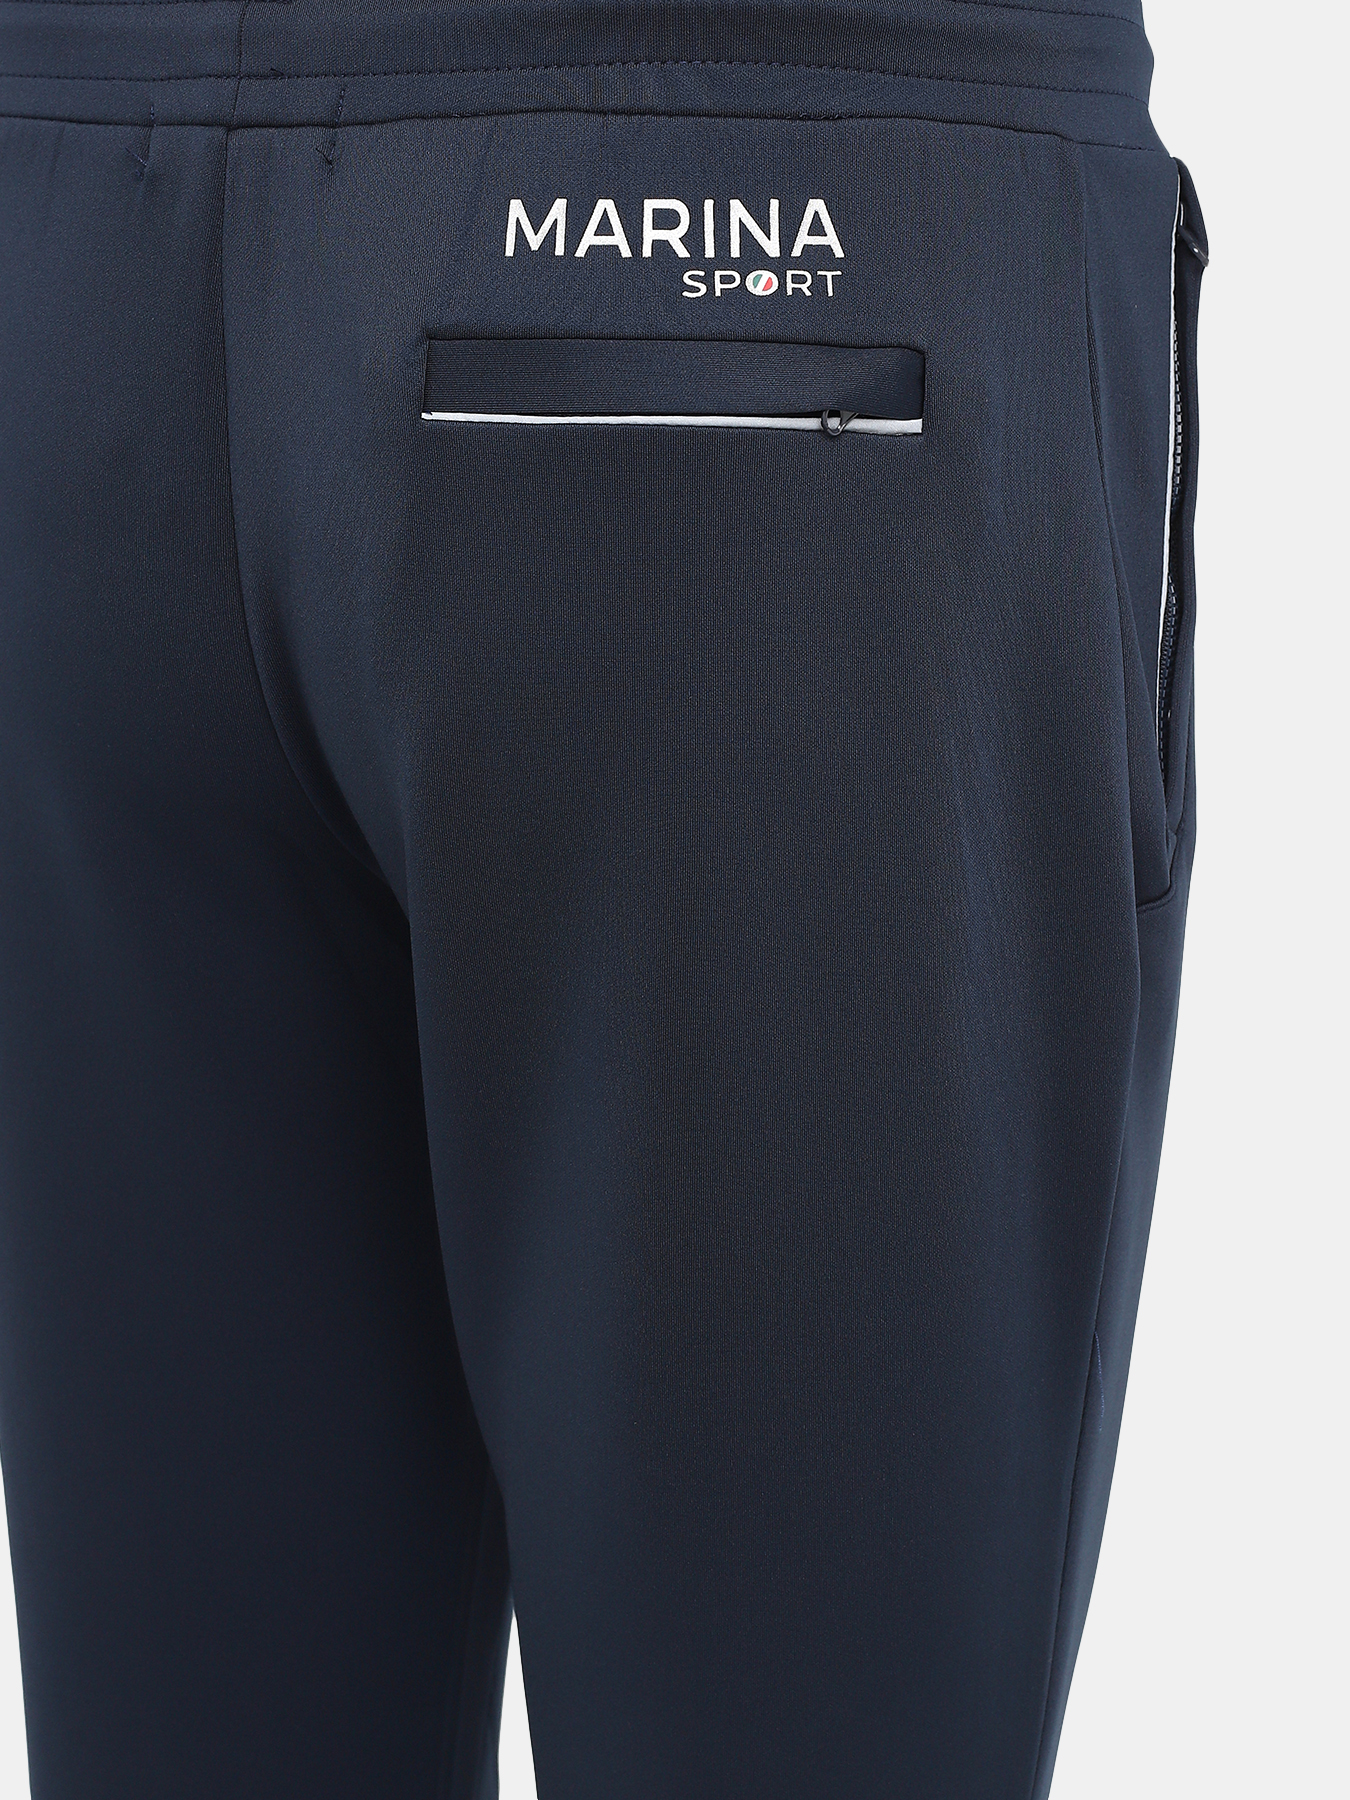 Брюки Marina Militare 412380-046, цвет темно-синий, размер 54-56 - фото 2